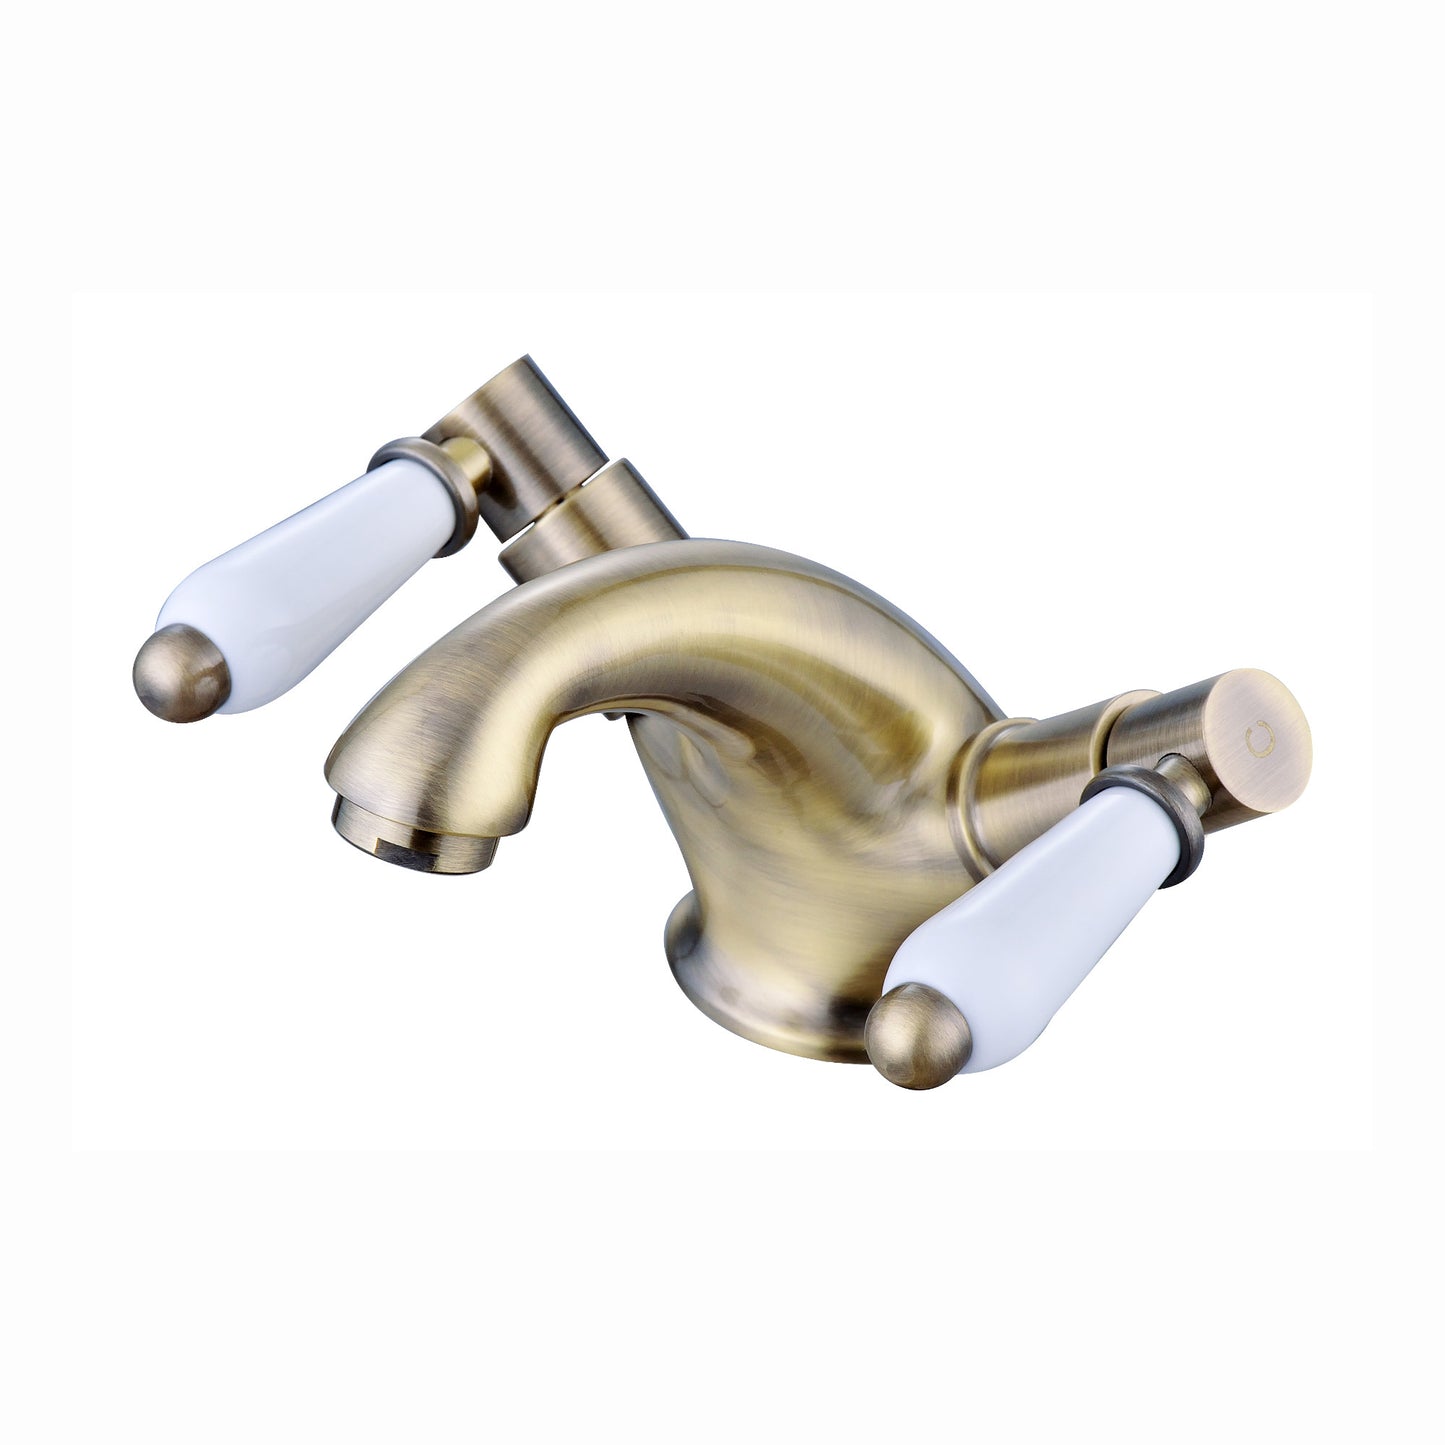 Downton basin mixer tap with white ceramic levers - antique bronze